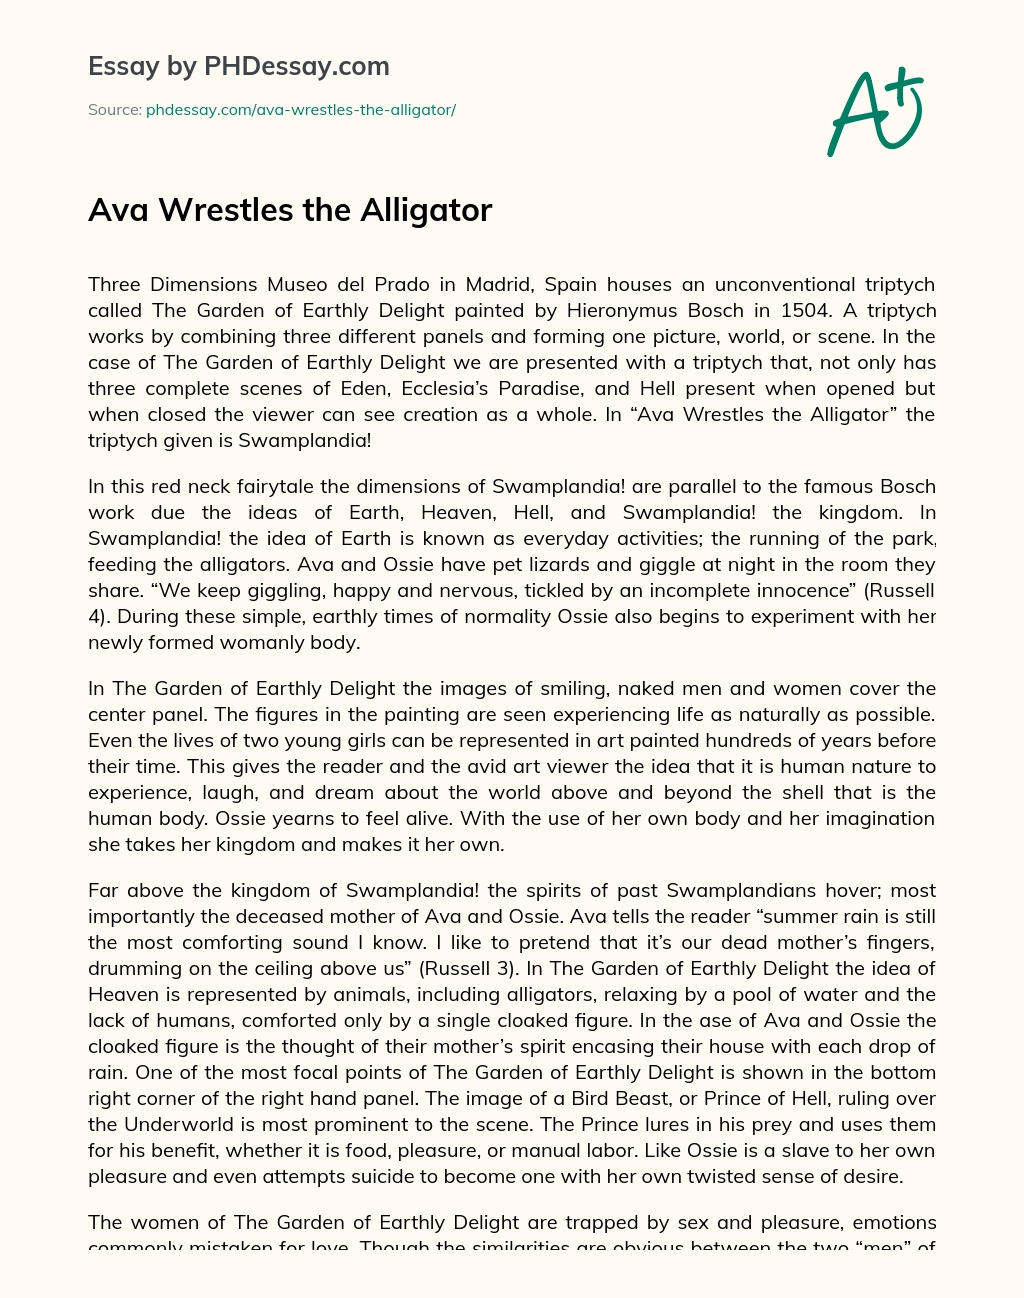 Ava Wrestles the Alligator essay